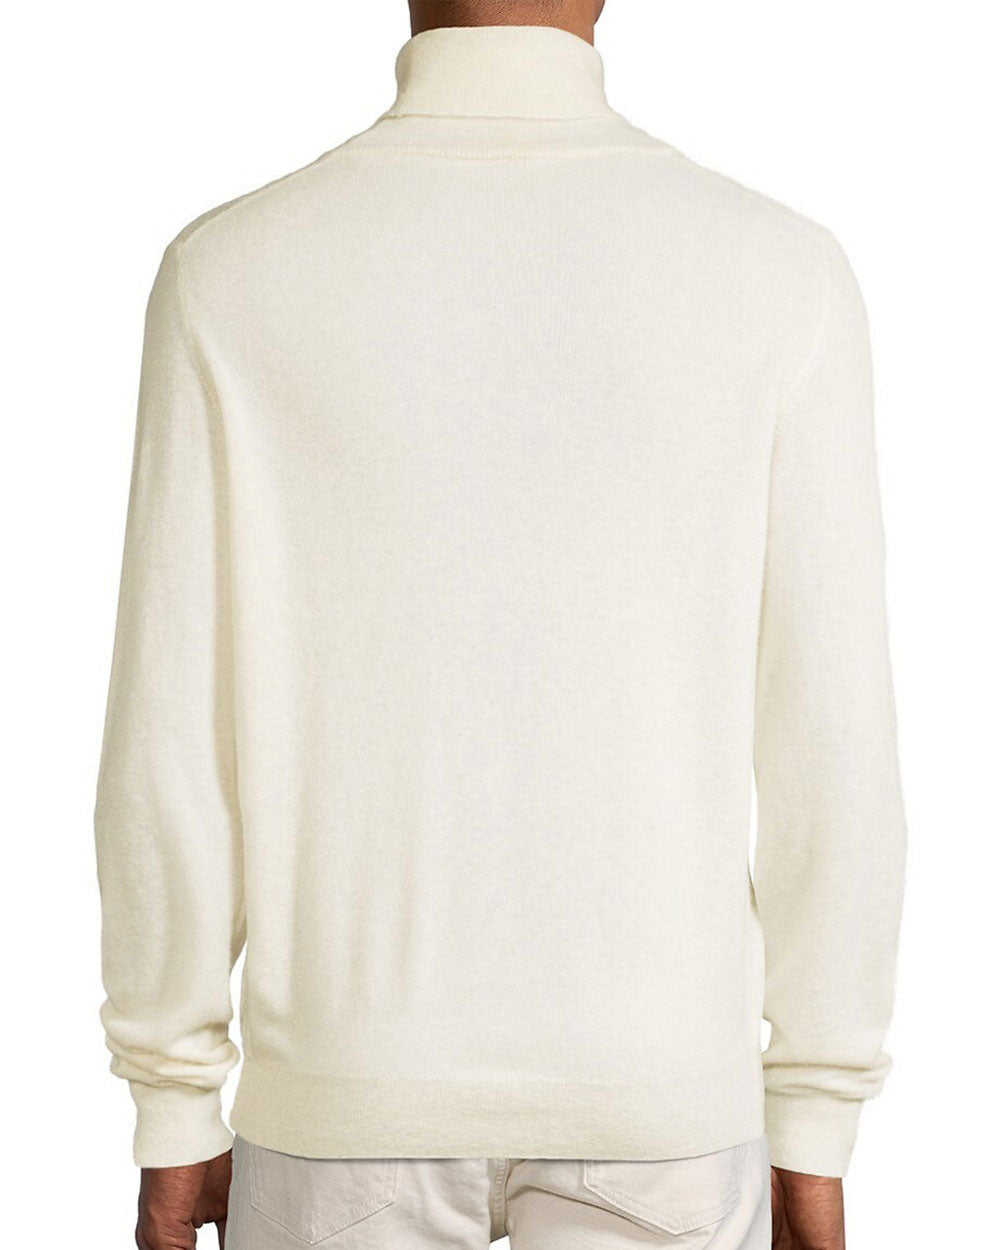 Cream Cashmere and Silk Turtleneck Sweater